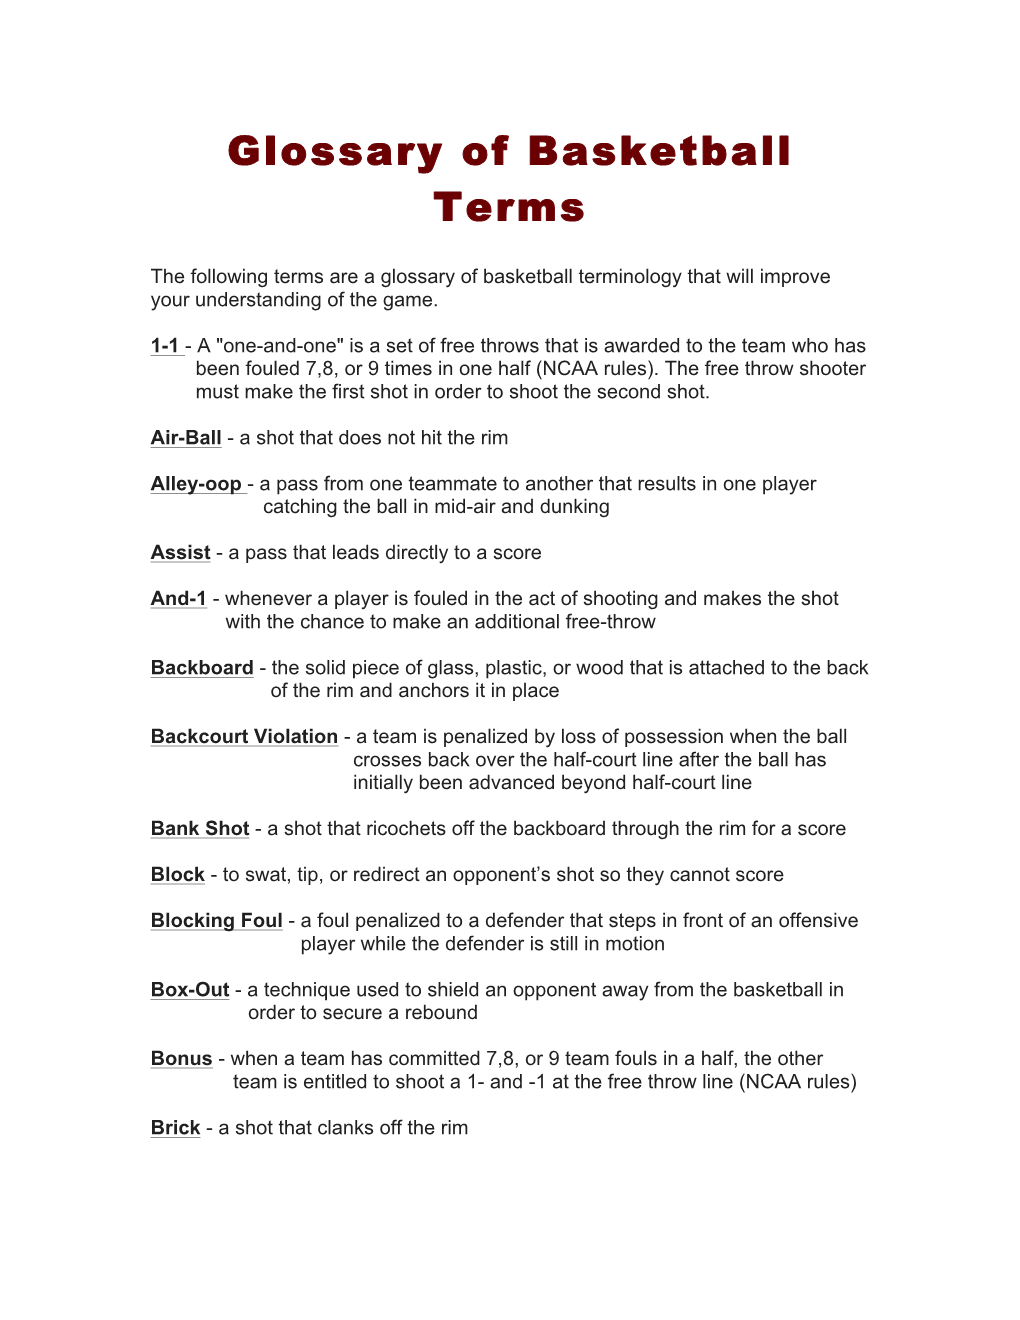 Glossary of Basketball Terms